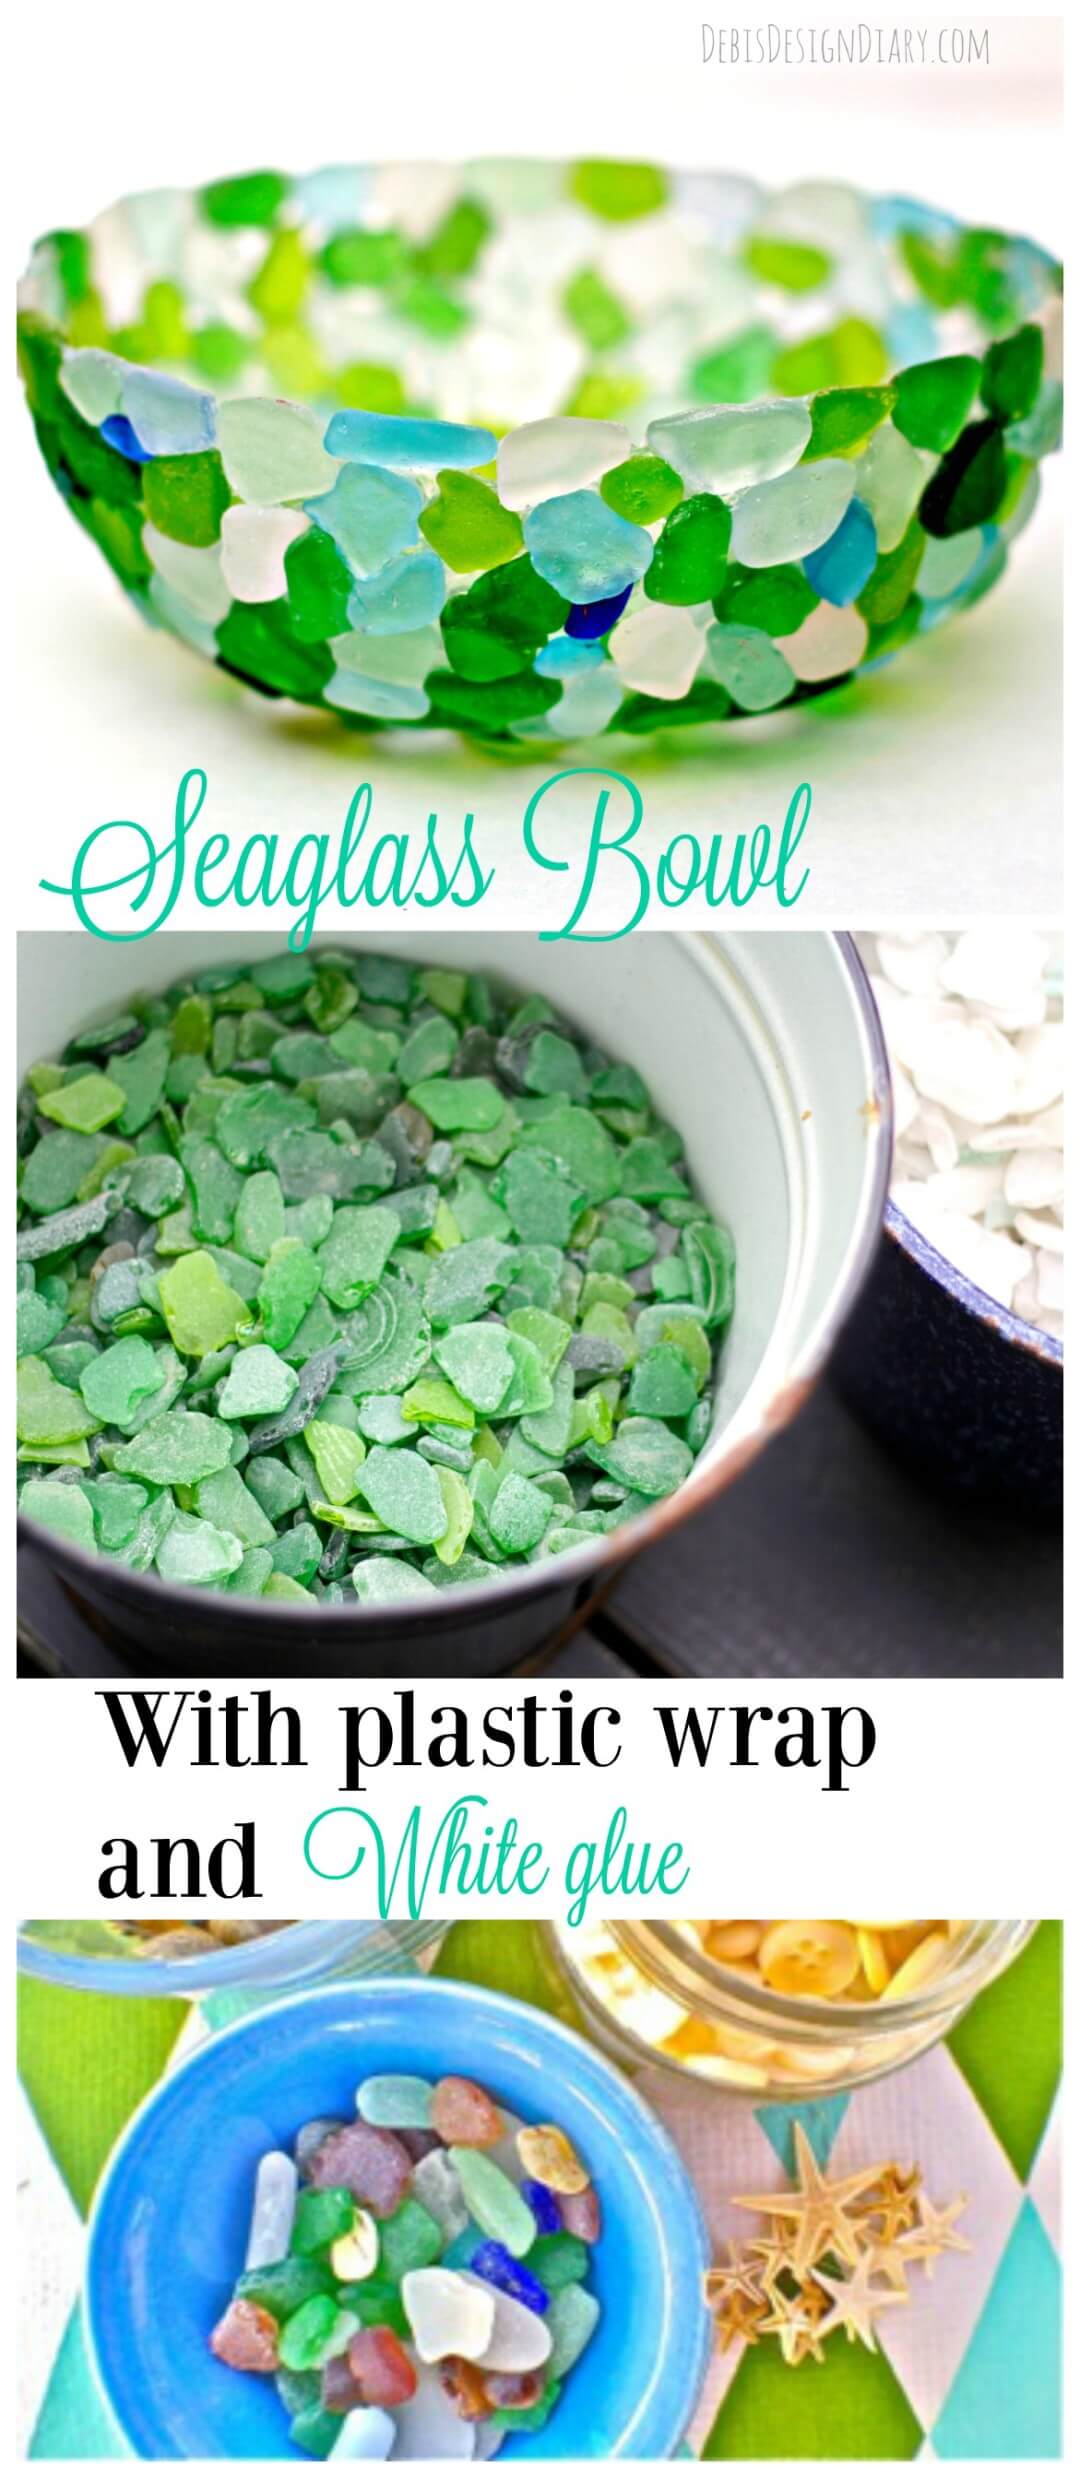 Create a Bowl Using Seaglass